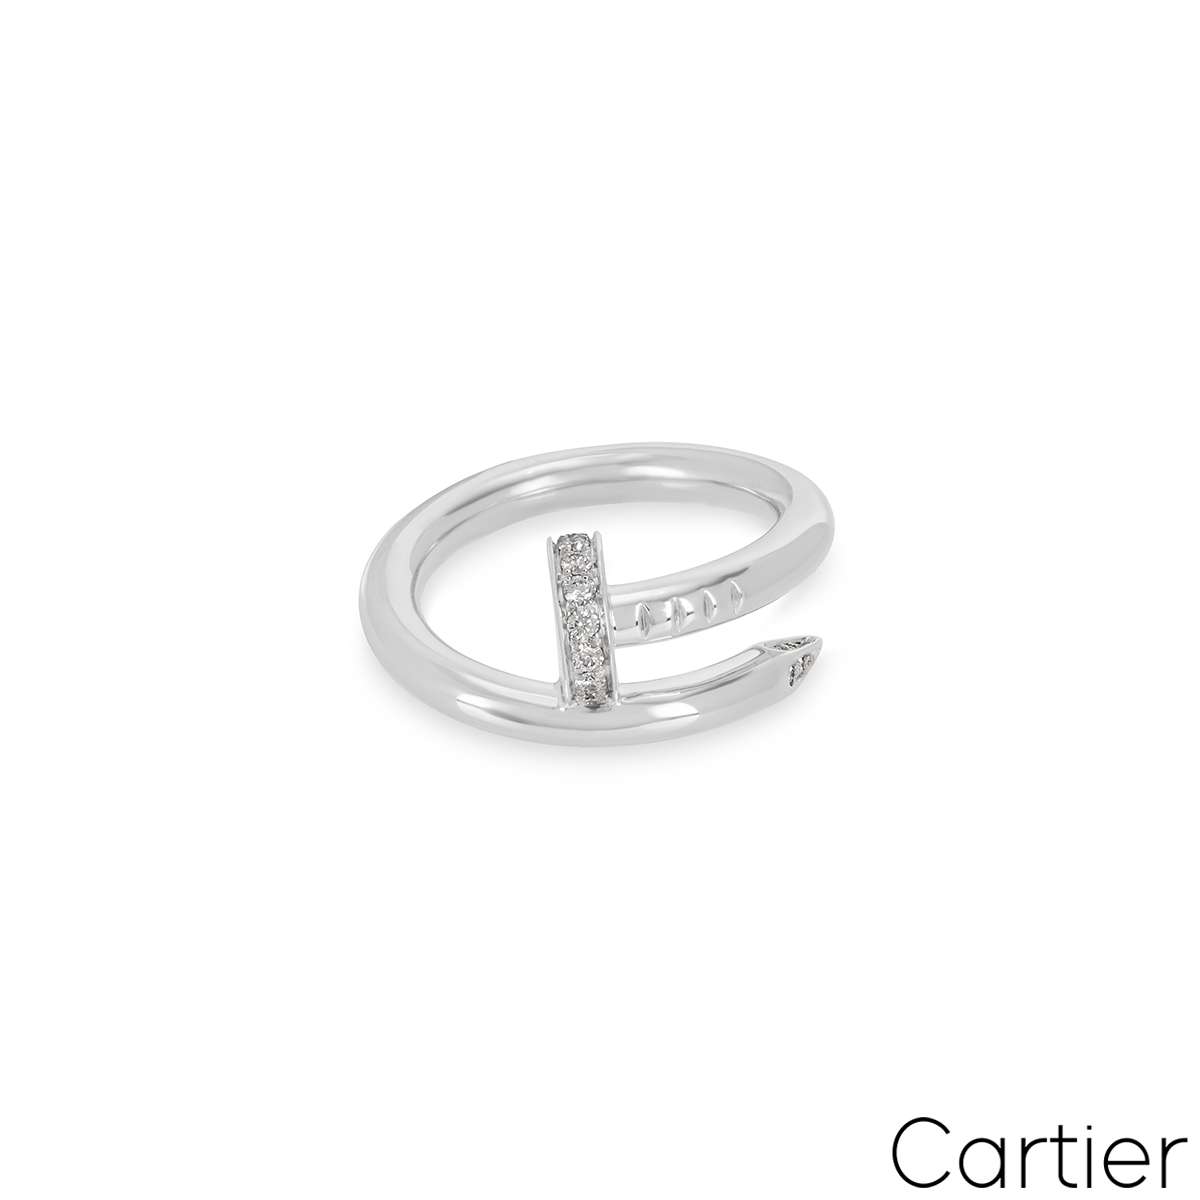 Cartier White Gold Diamond Juste un Clou Ring Size 52 B4092700 | Rich ...